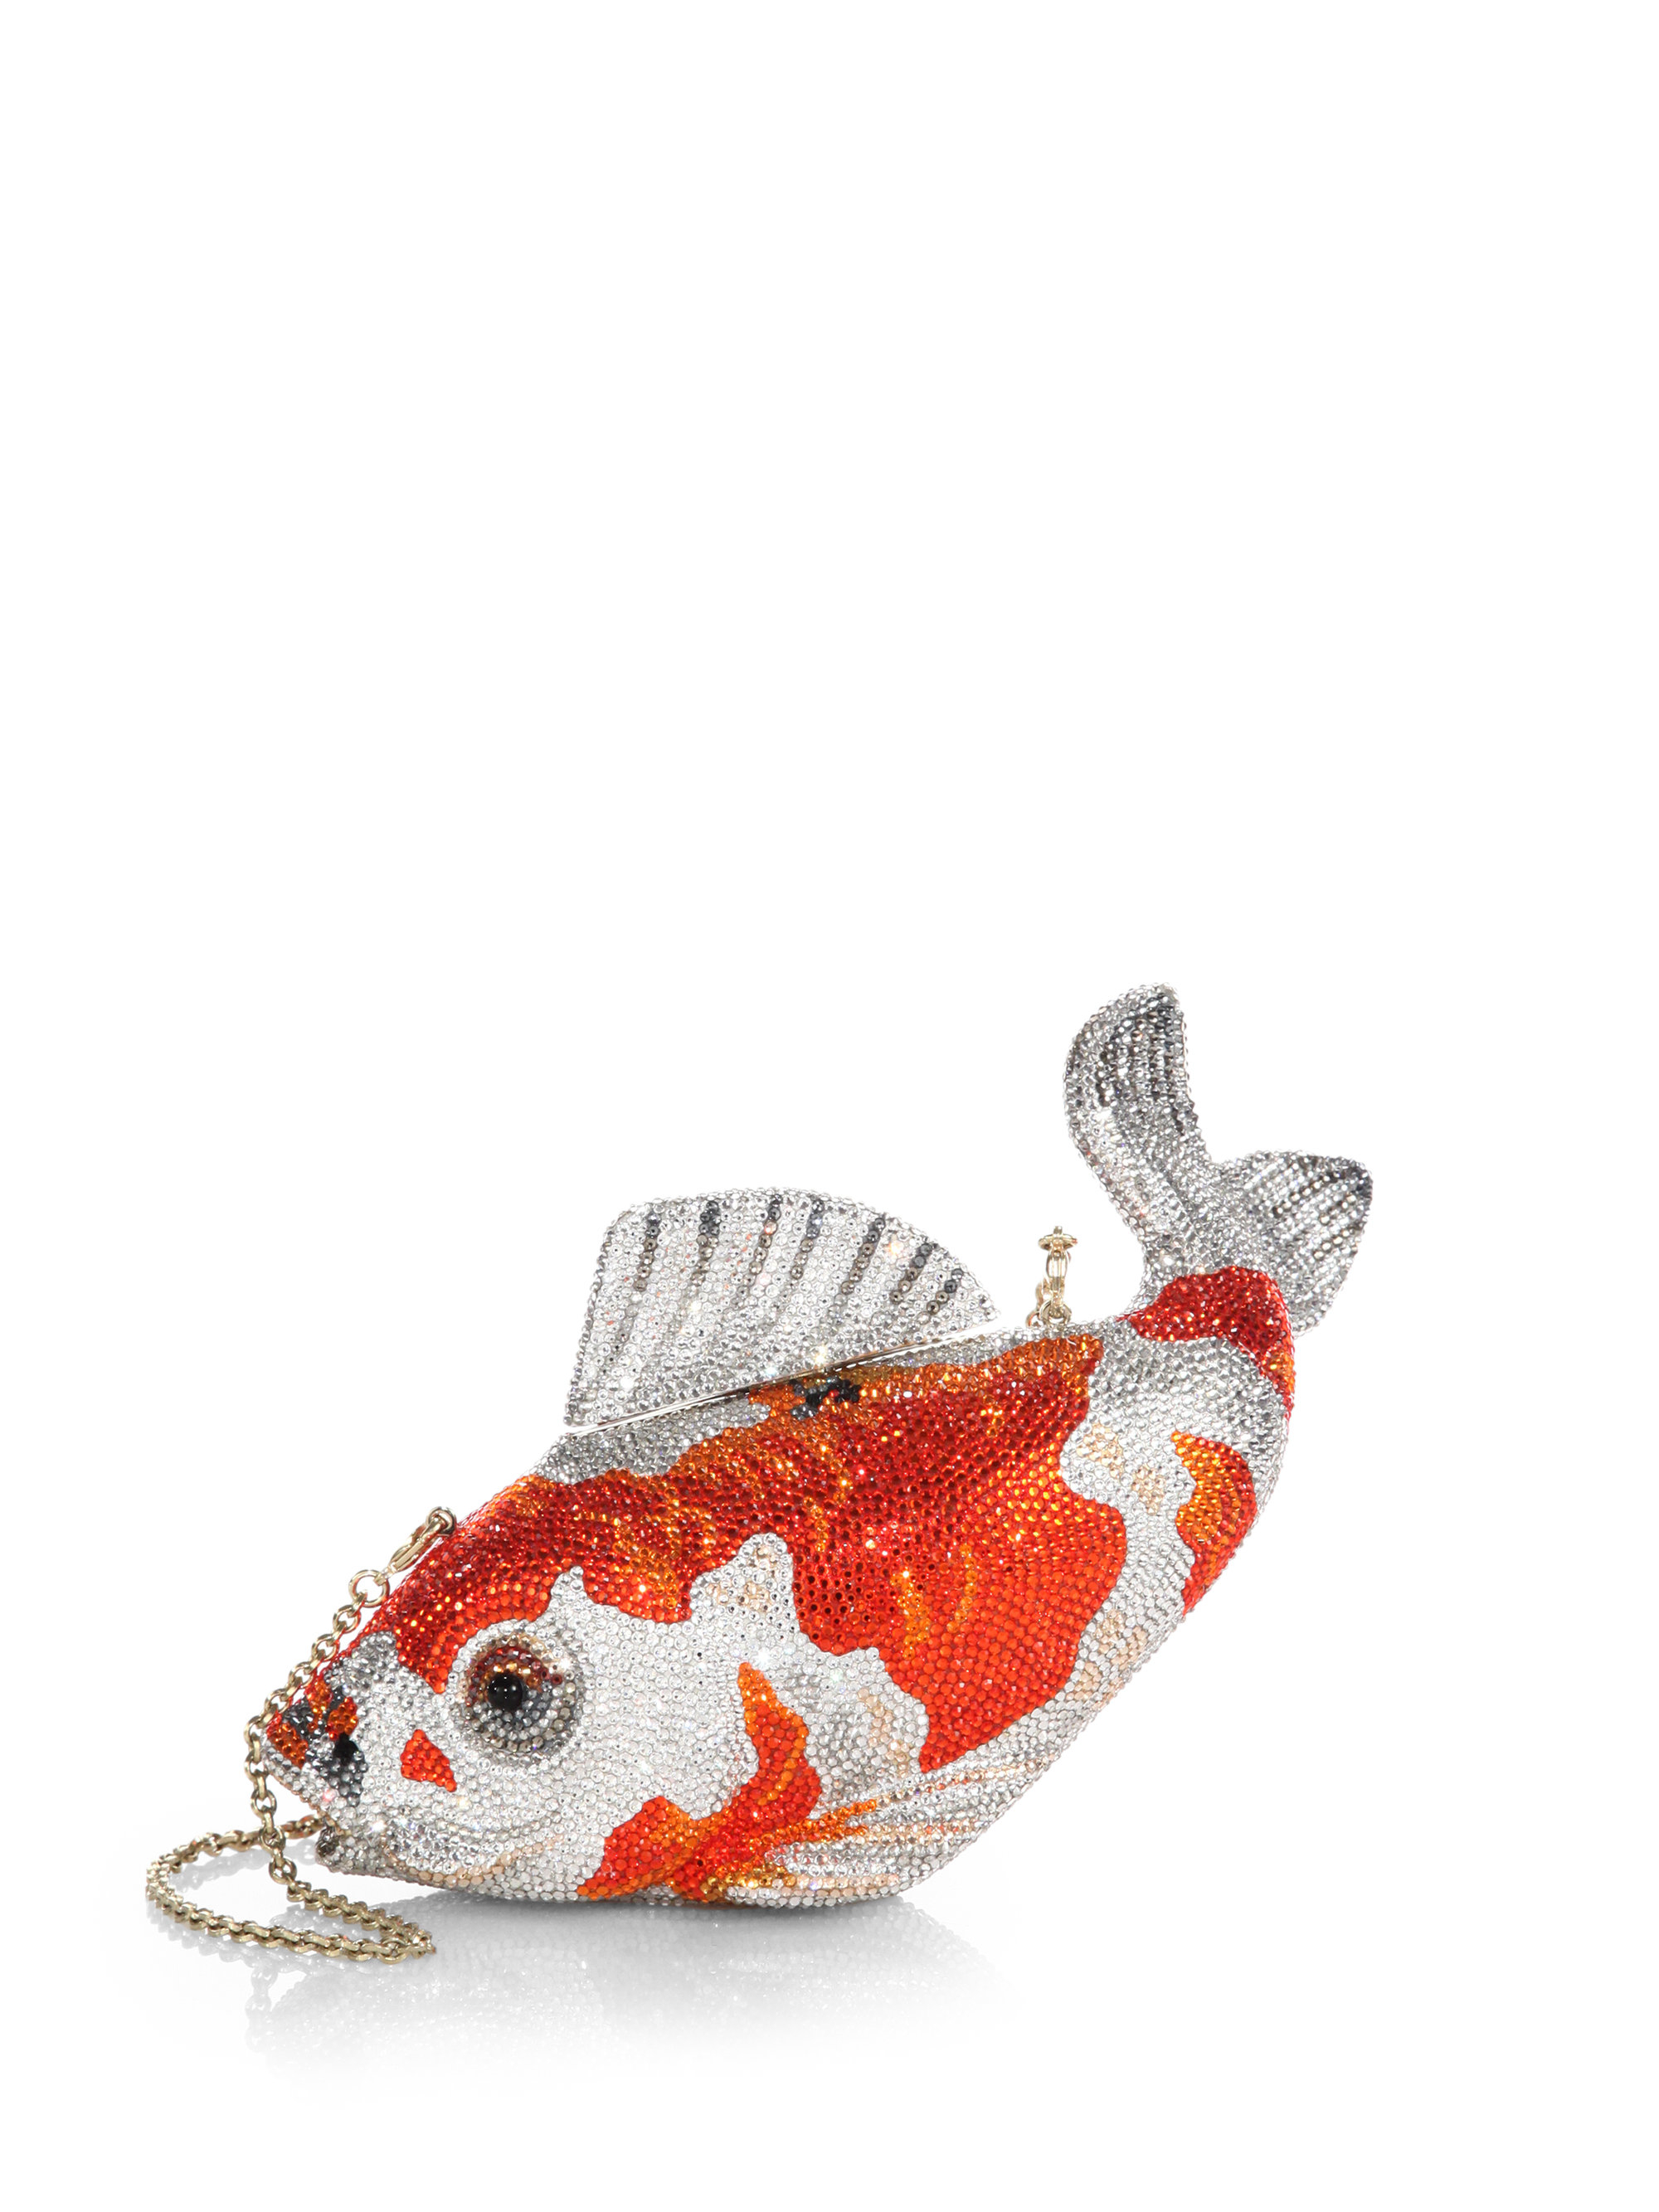 Judith Leiber Koi Fish Swarovski-Crystal Clutch in Orange | Lyst